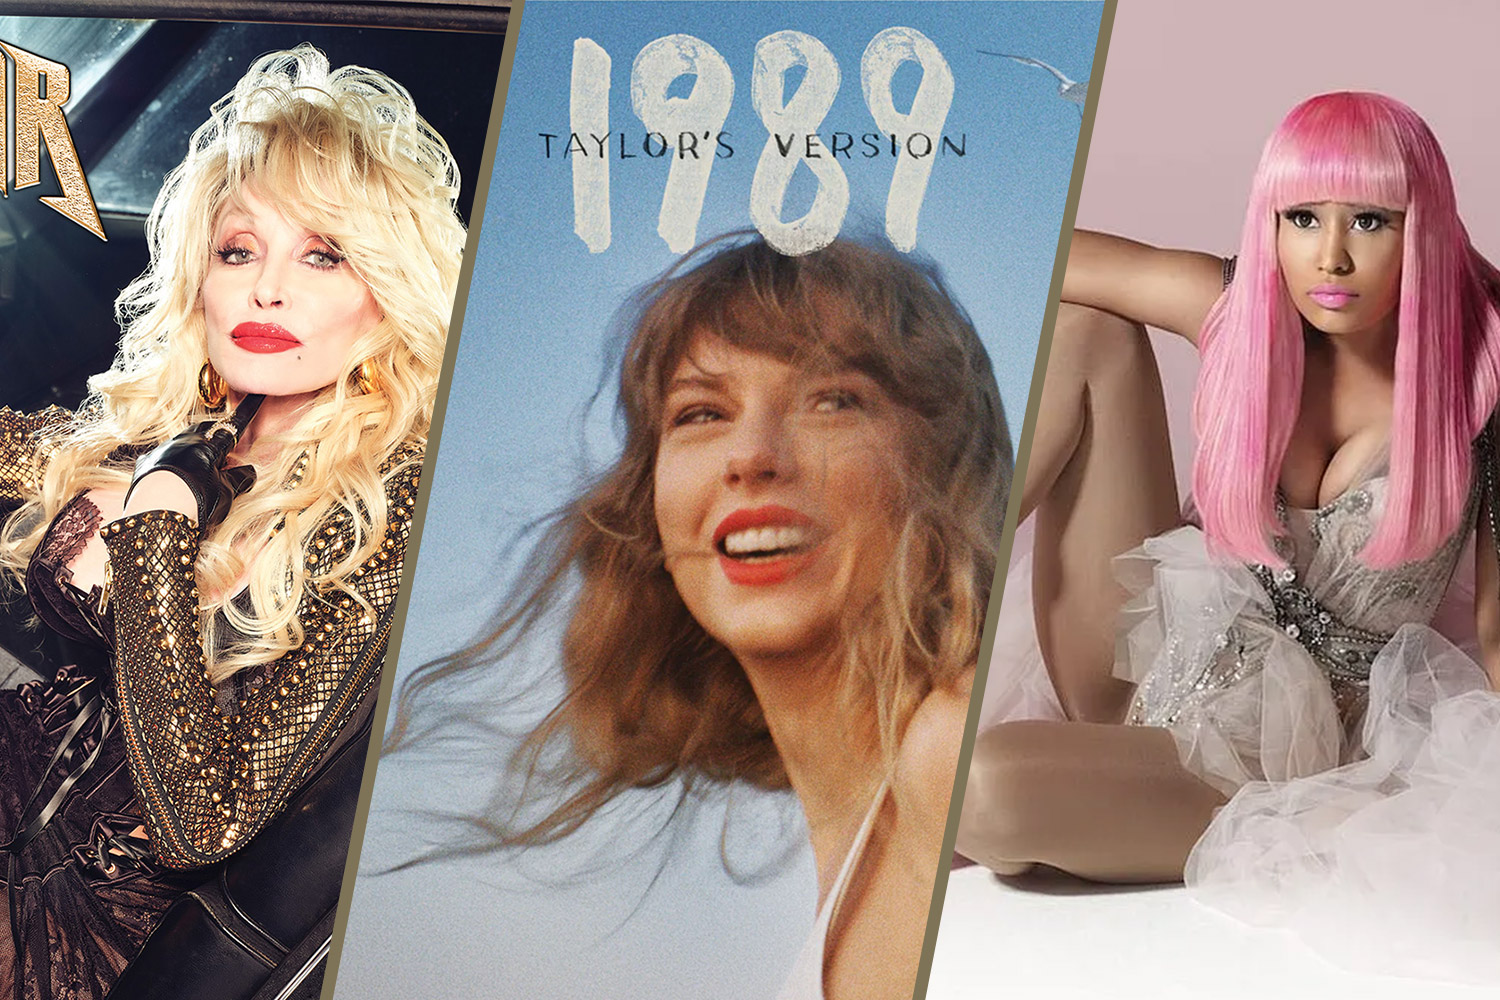 Collage of Dolly Parton's album Rockstar, Taylor Swift's album 1989 (Taylor's Version), and Nicki Minaj's album Pink Friday 2